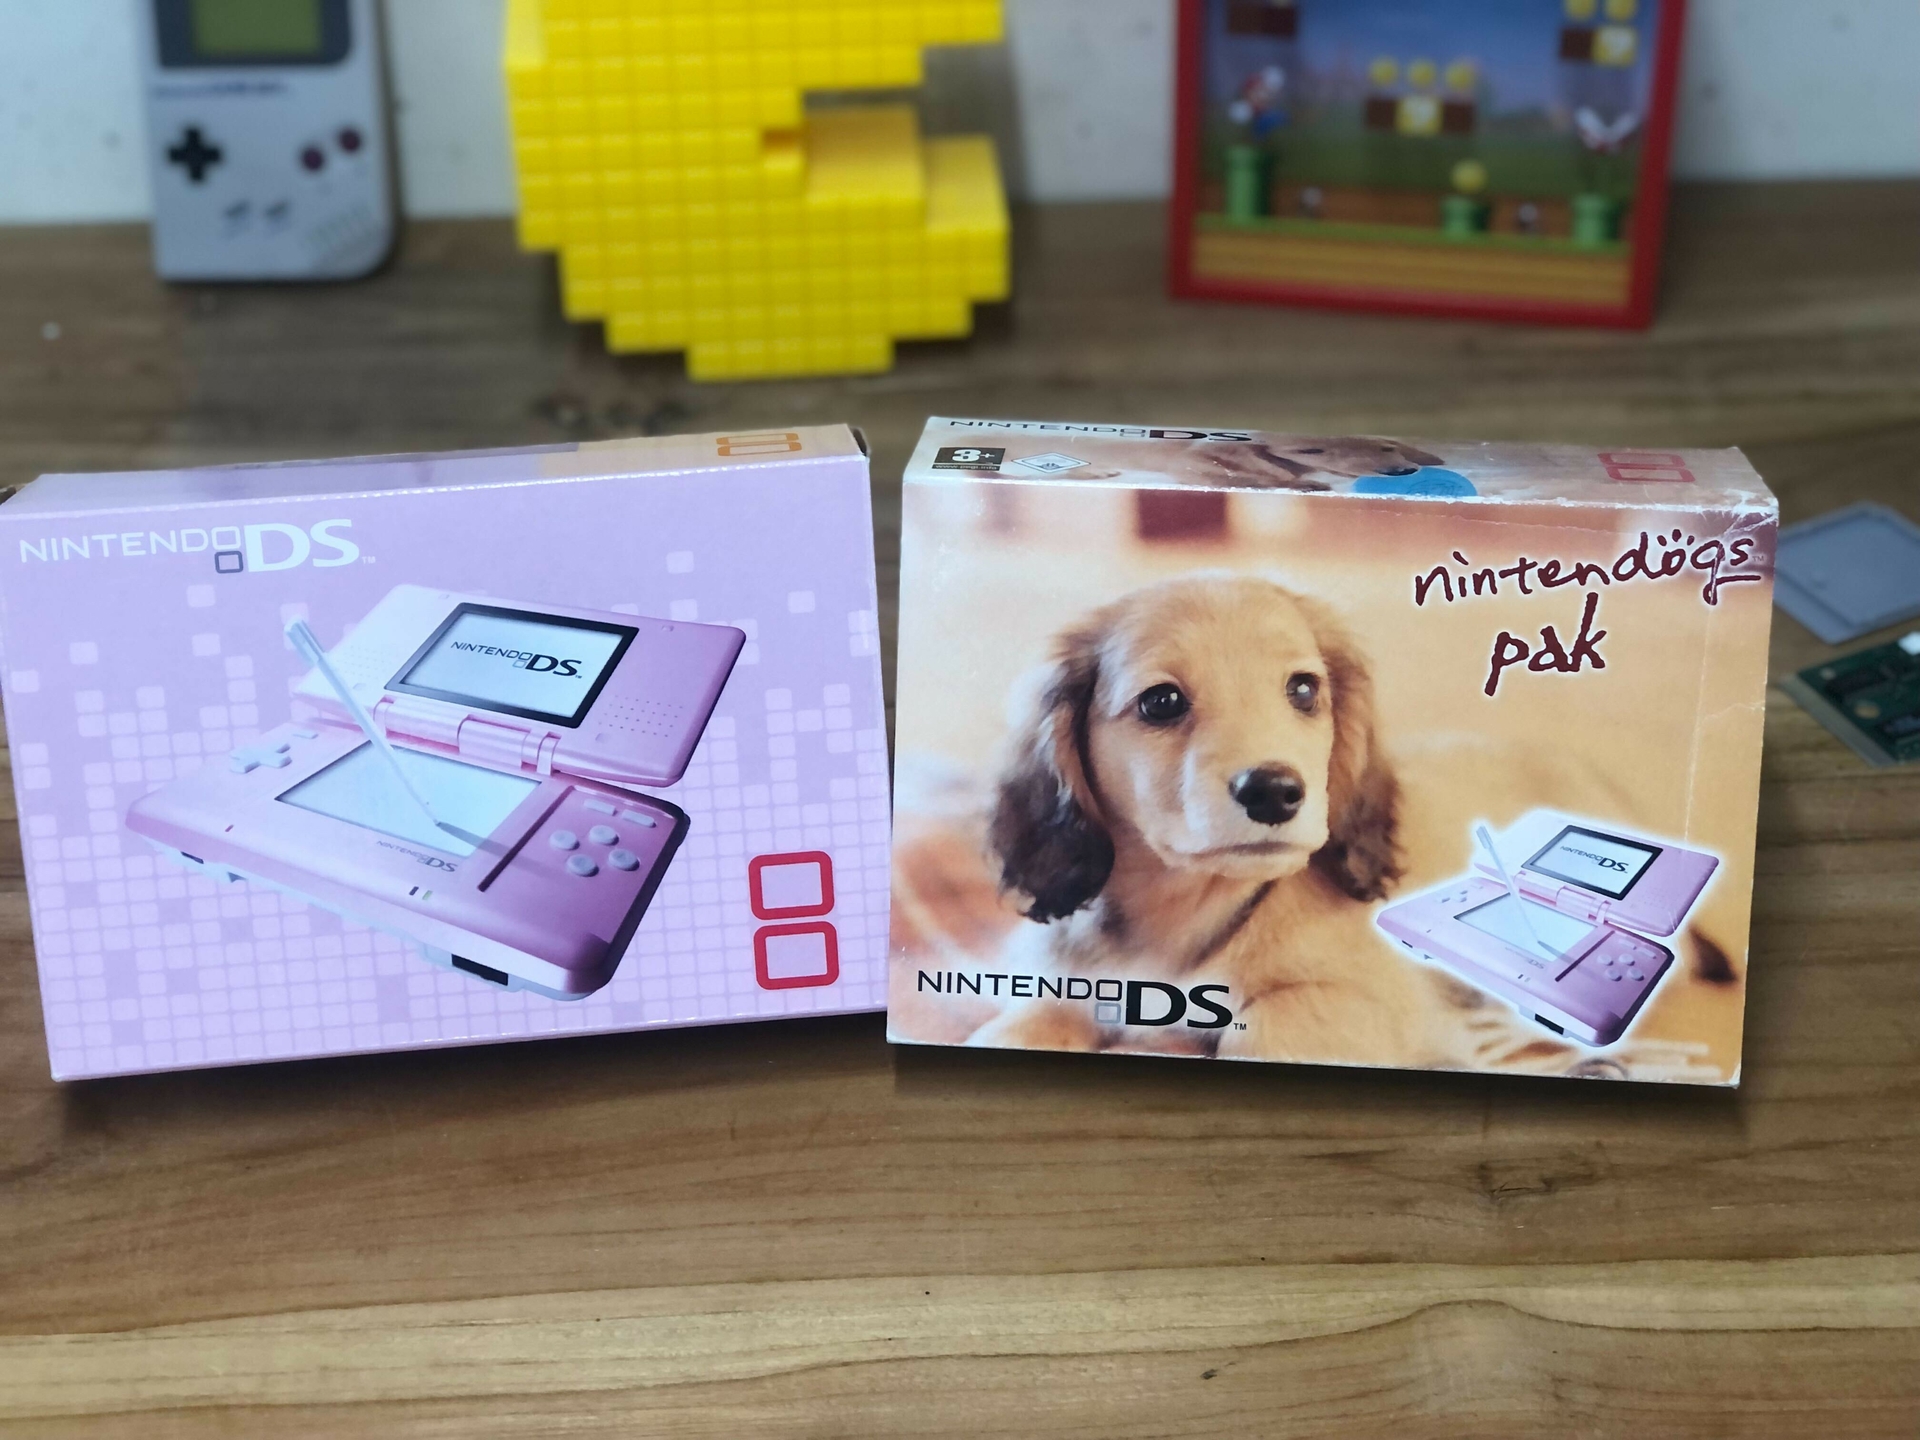 DS Original Pink - Nintendogs Pak [Complete] - Nintendo DS Hardware - 5